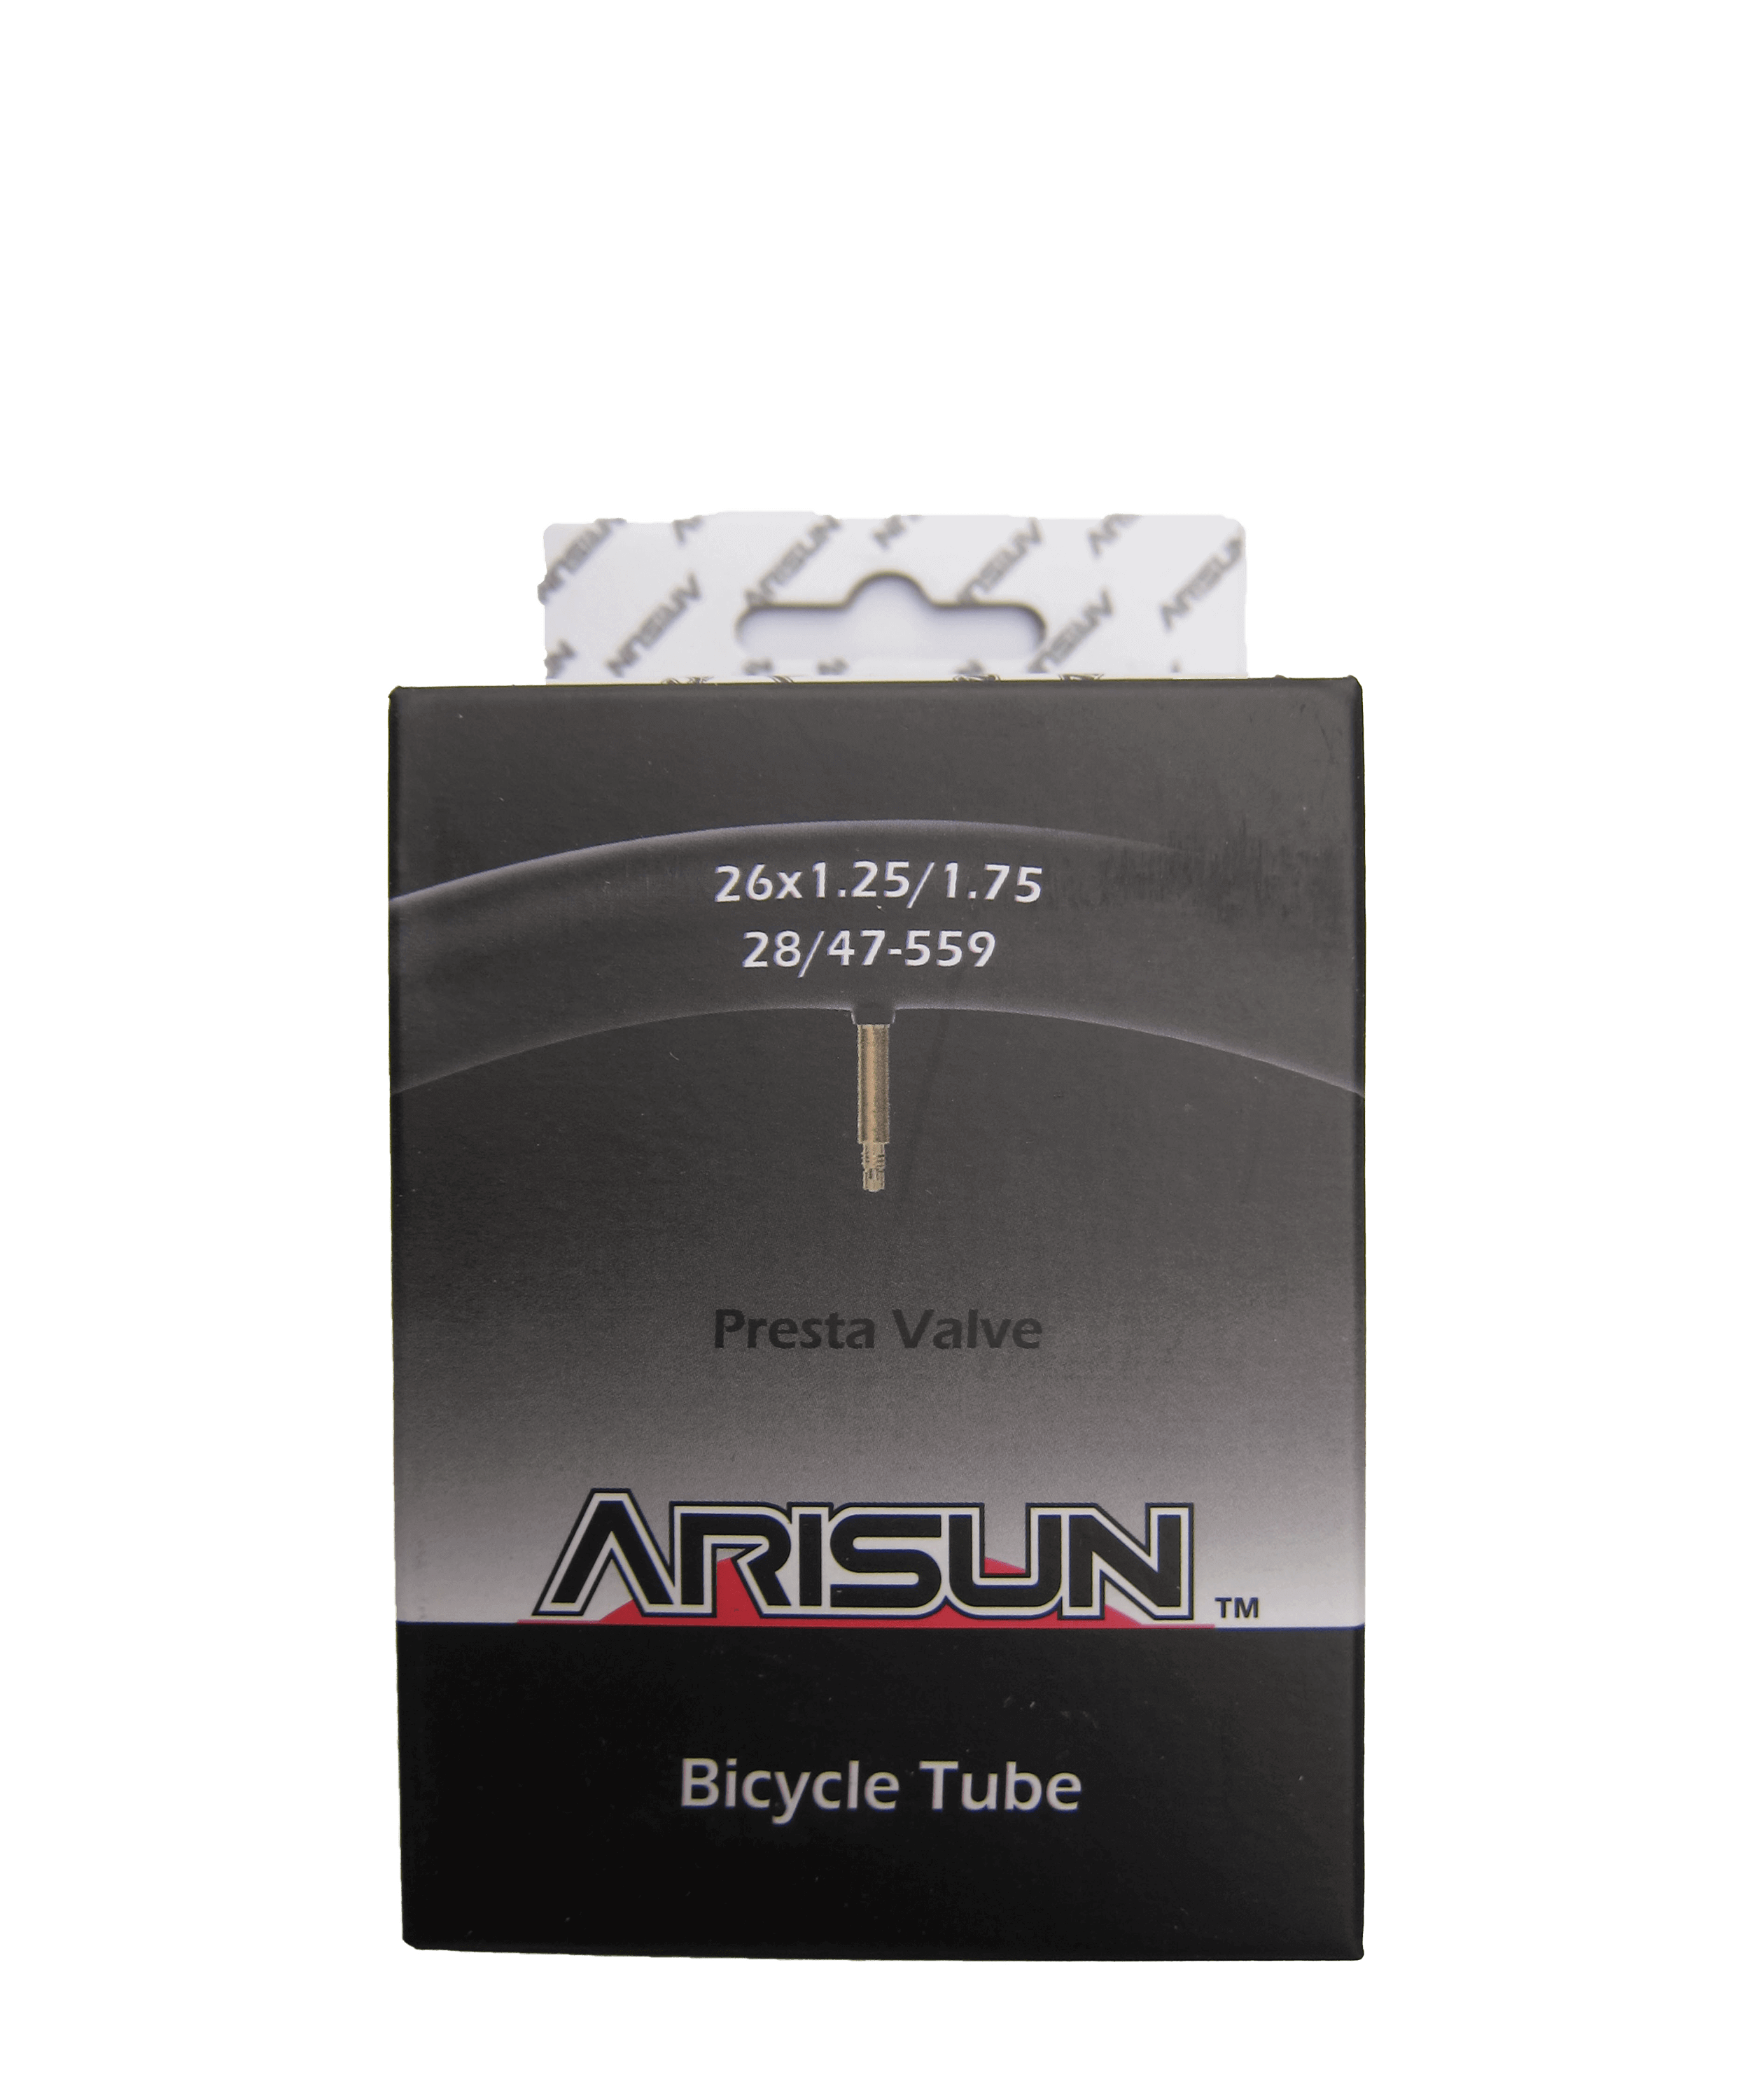 ARISUN 26x1.25-1.75 Cycling Inner Tube - Presta Valve